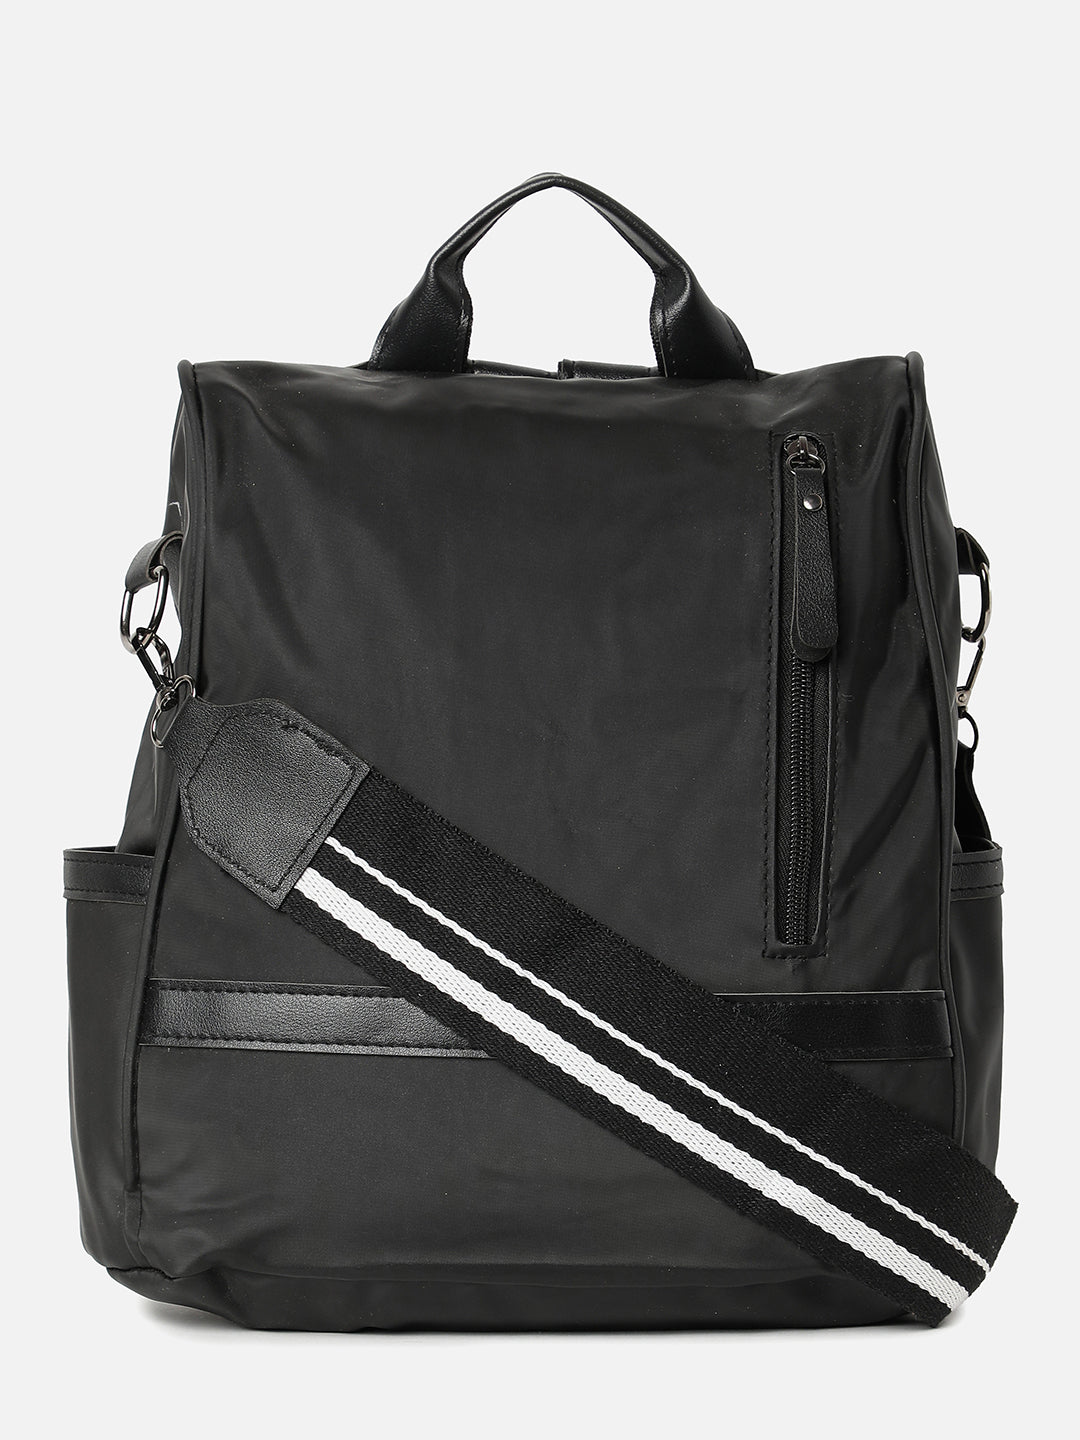 Sharron Black Backpack